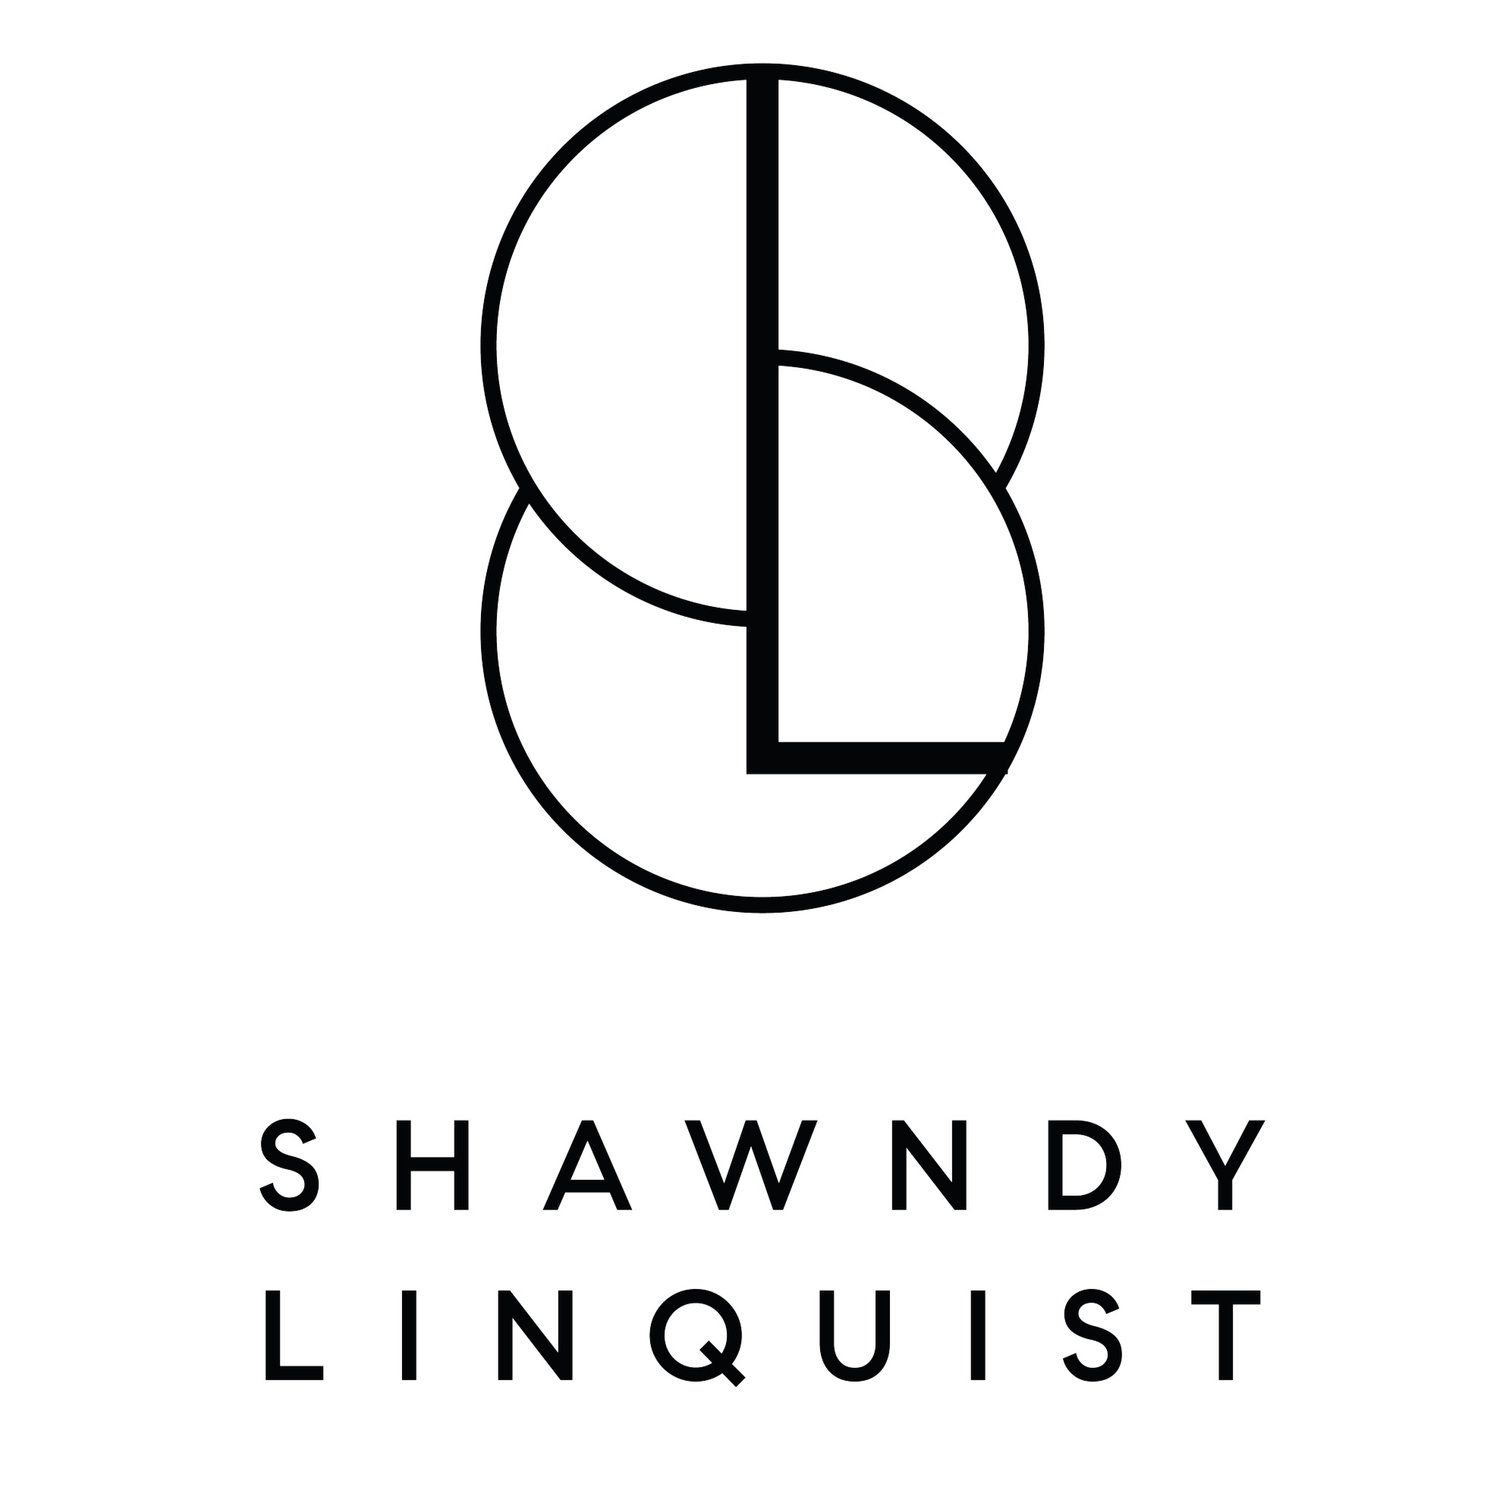 Shawndy Linquist